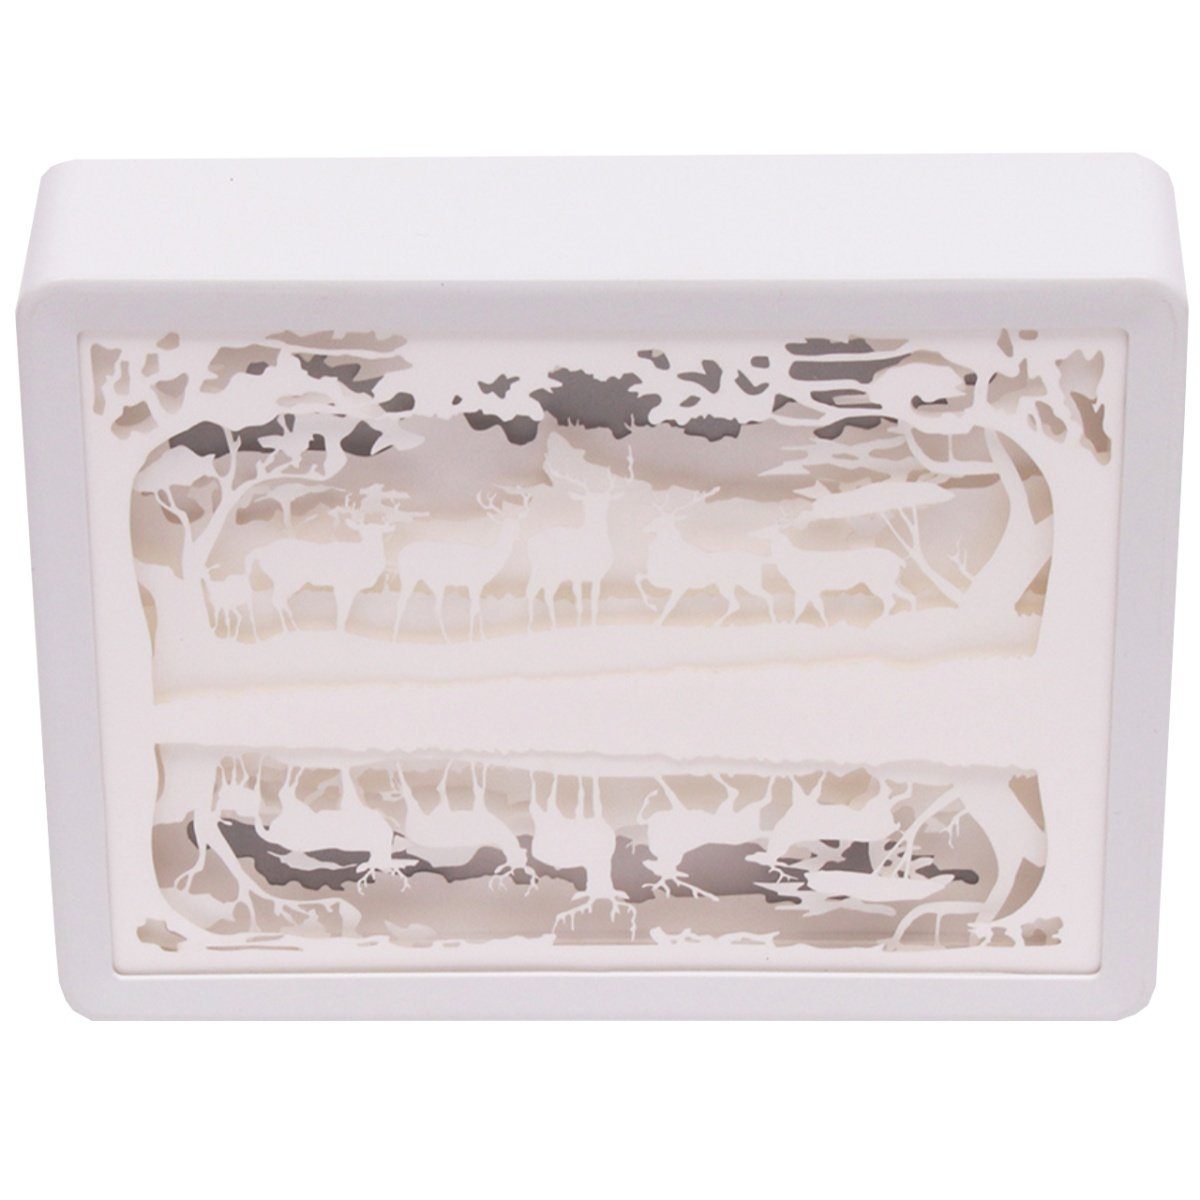 Papercut - Shadowbox, 21x5x16cm, 3D Lichtbox LED integriert, Deer, Wohnaccessoire, kabellose LED Warmweiß, CiM fest RECTANGLE Dekoration Nachtlicht,